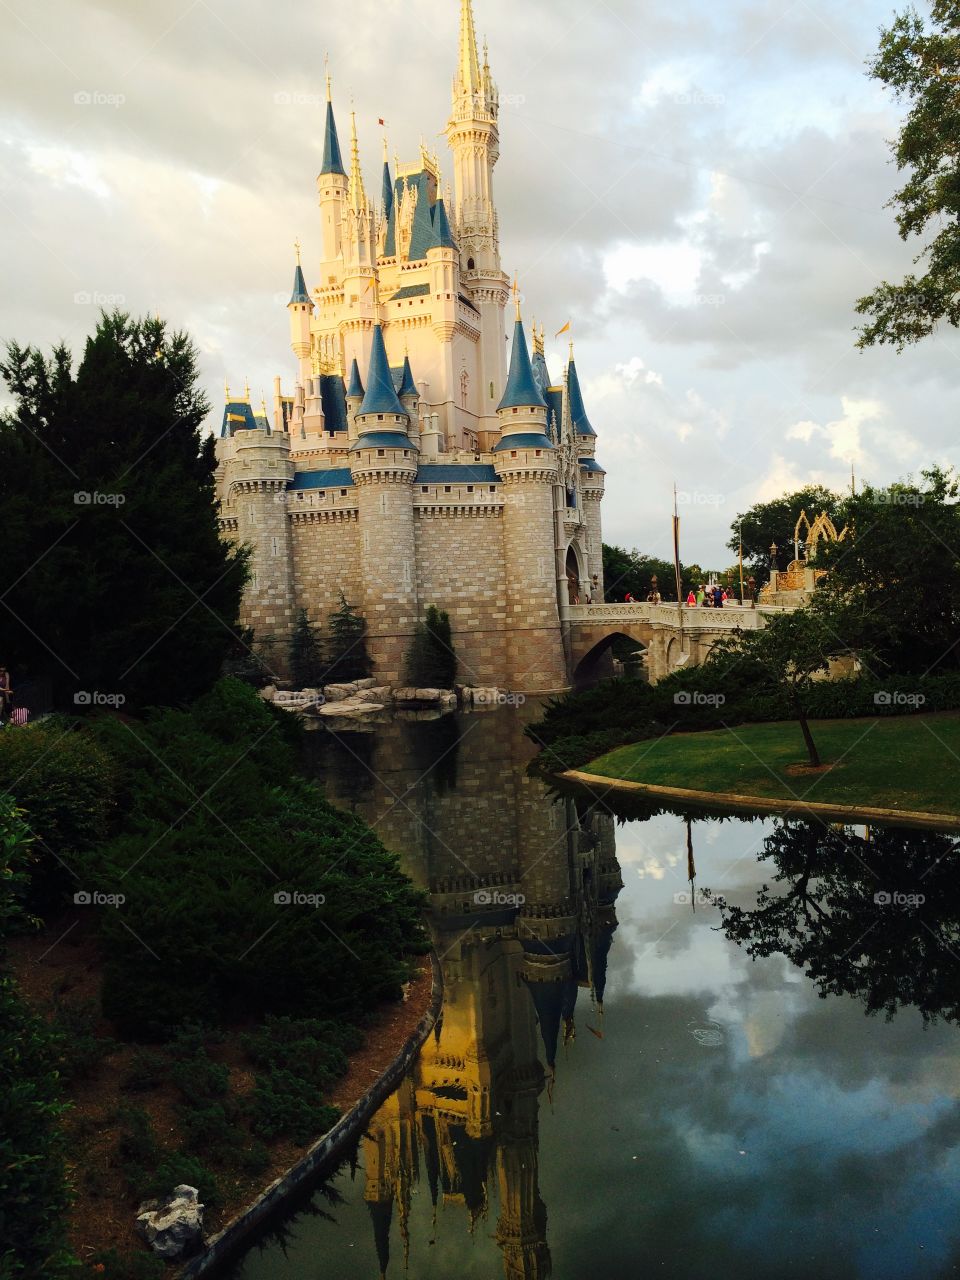 Cinderella's Castle . Cinderella's Castle in Walt Disney World, Orlando Florida. Taken in the mid-afternoon. 